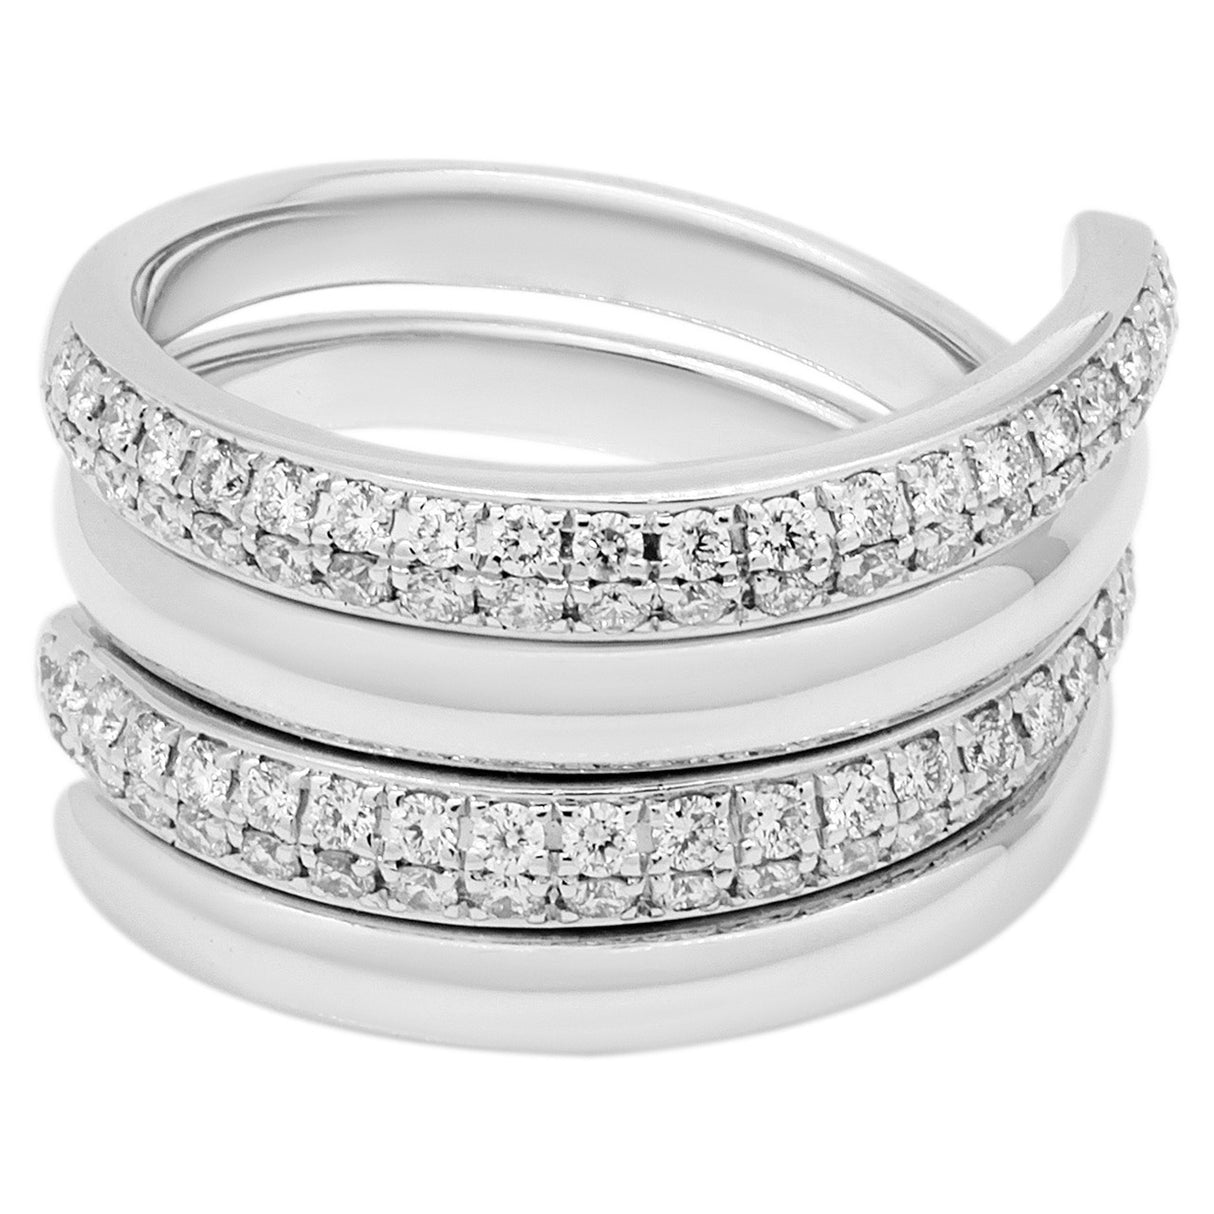 18K White Gold 1.04 Carat Diamond Coil Ring Set